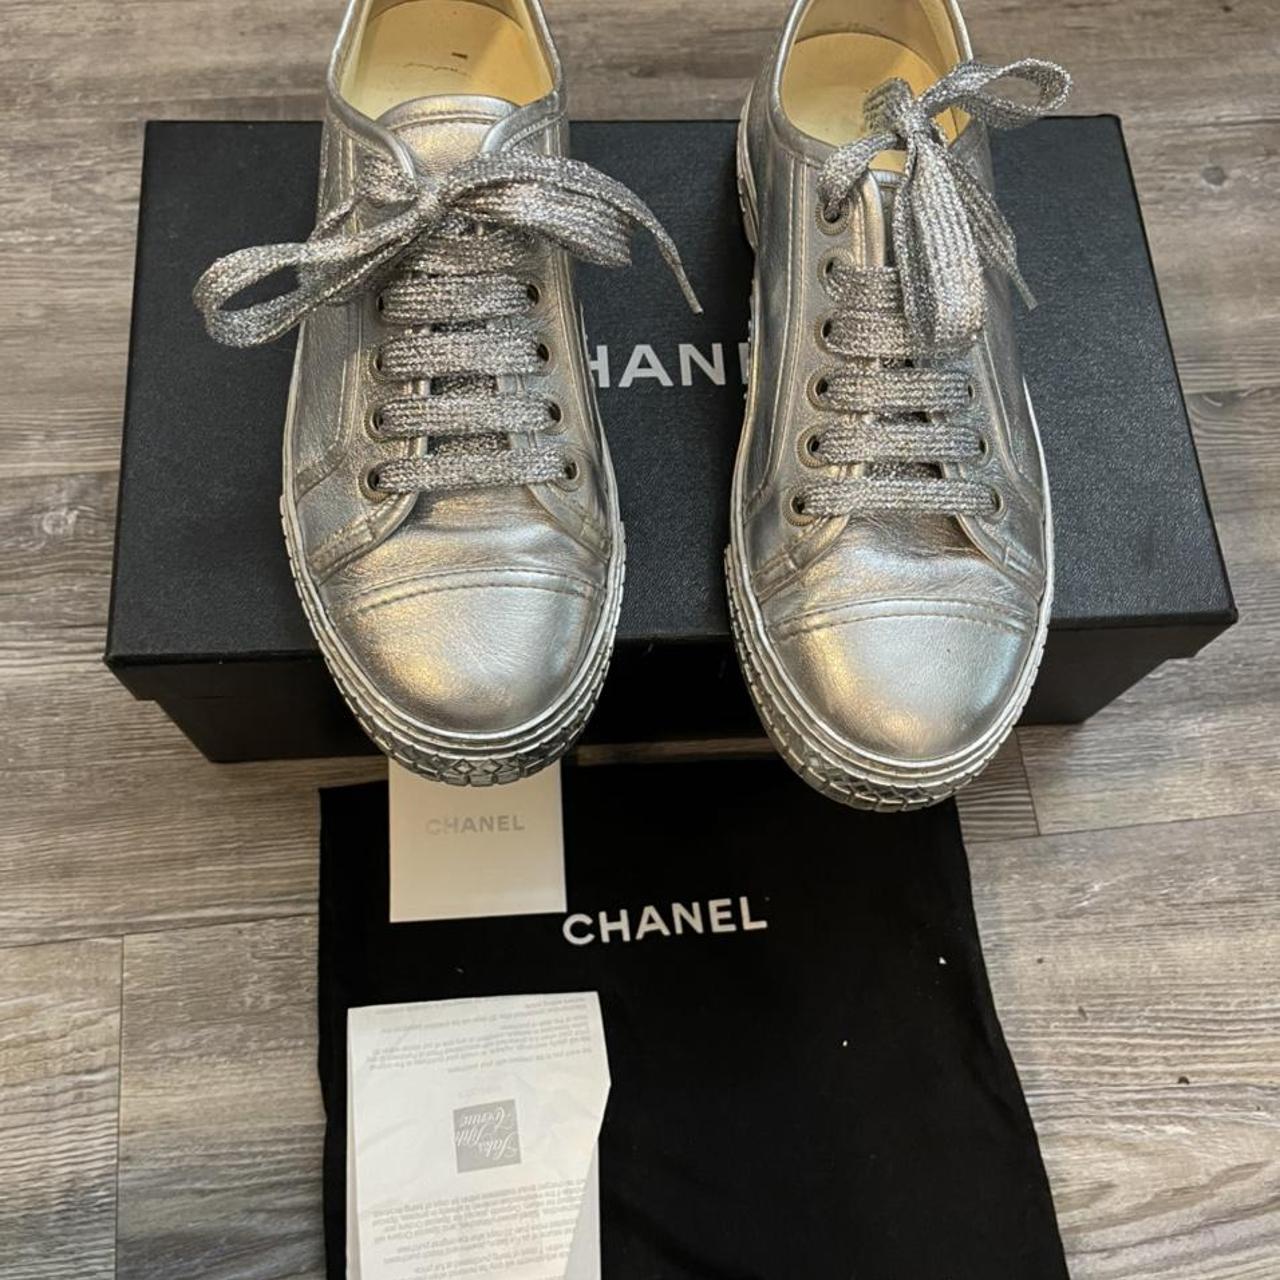 CHANEL, Shoes, Authentic Chanel Mesh Espadrille